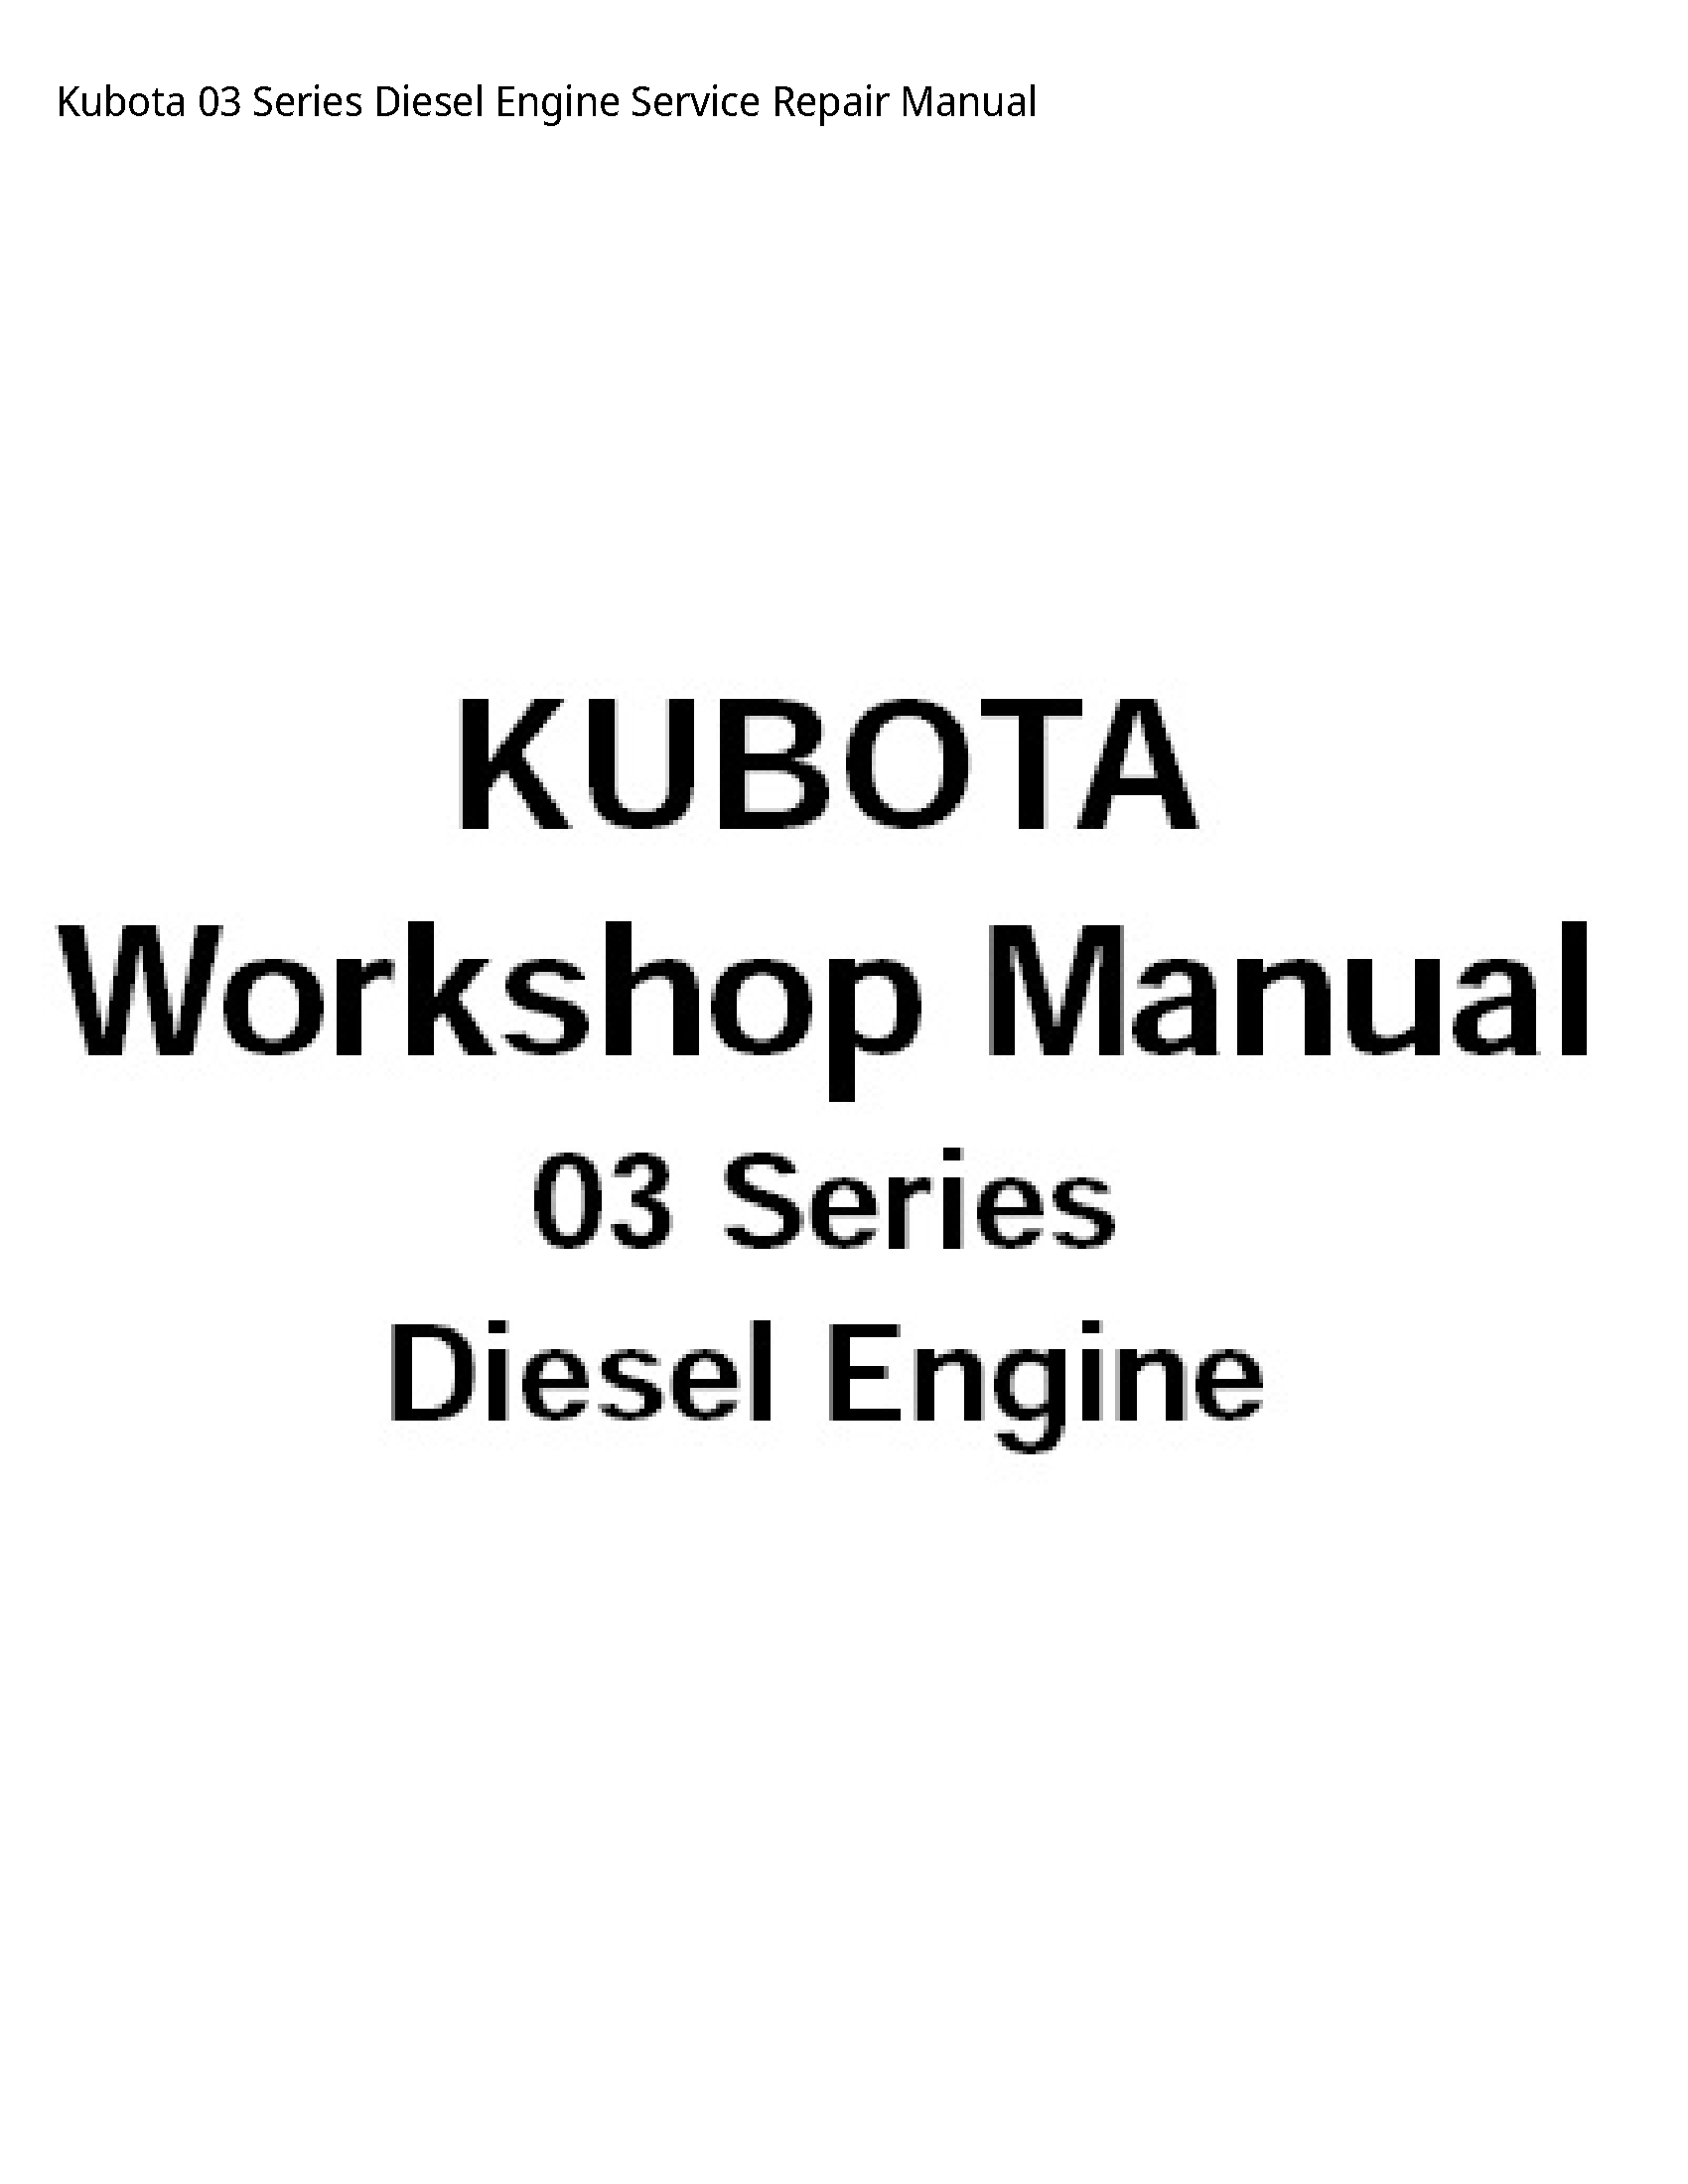 Kubota 03 Series Diesel Engine manual